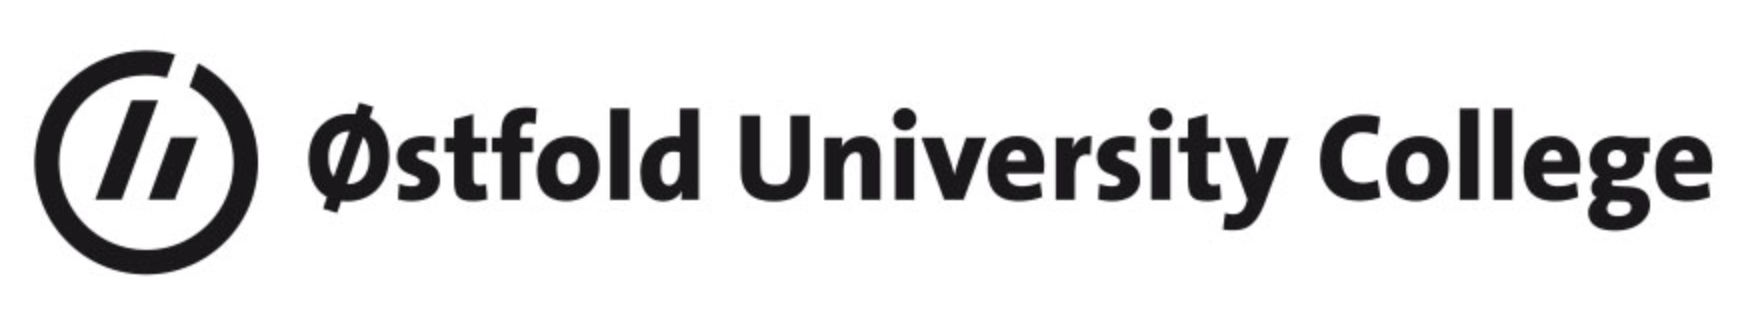 Østfold University College logo